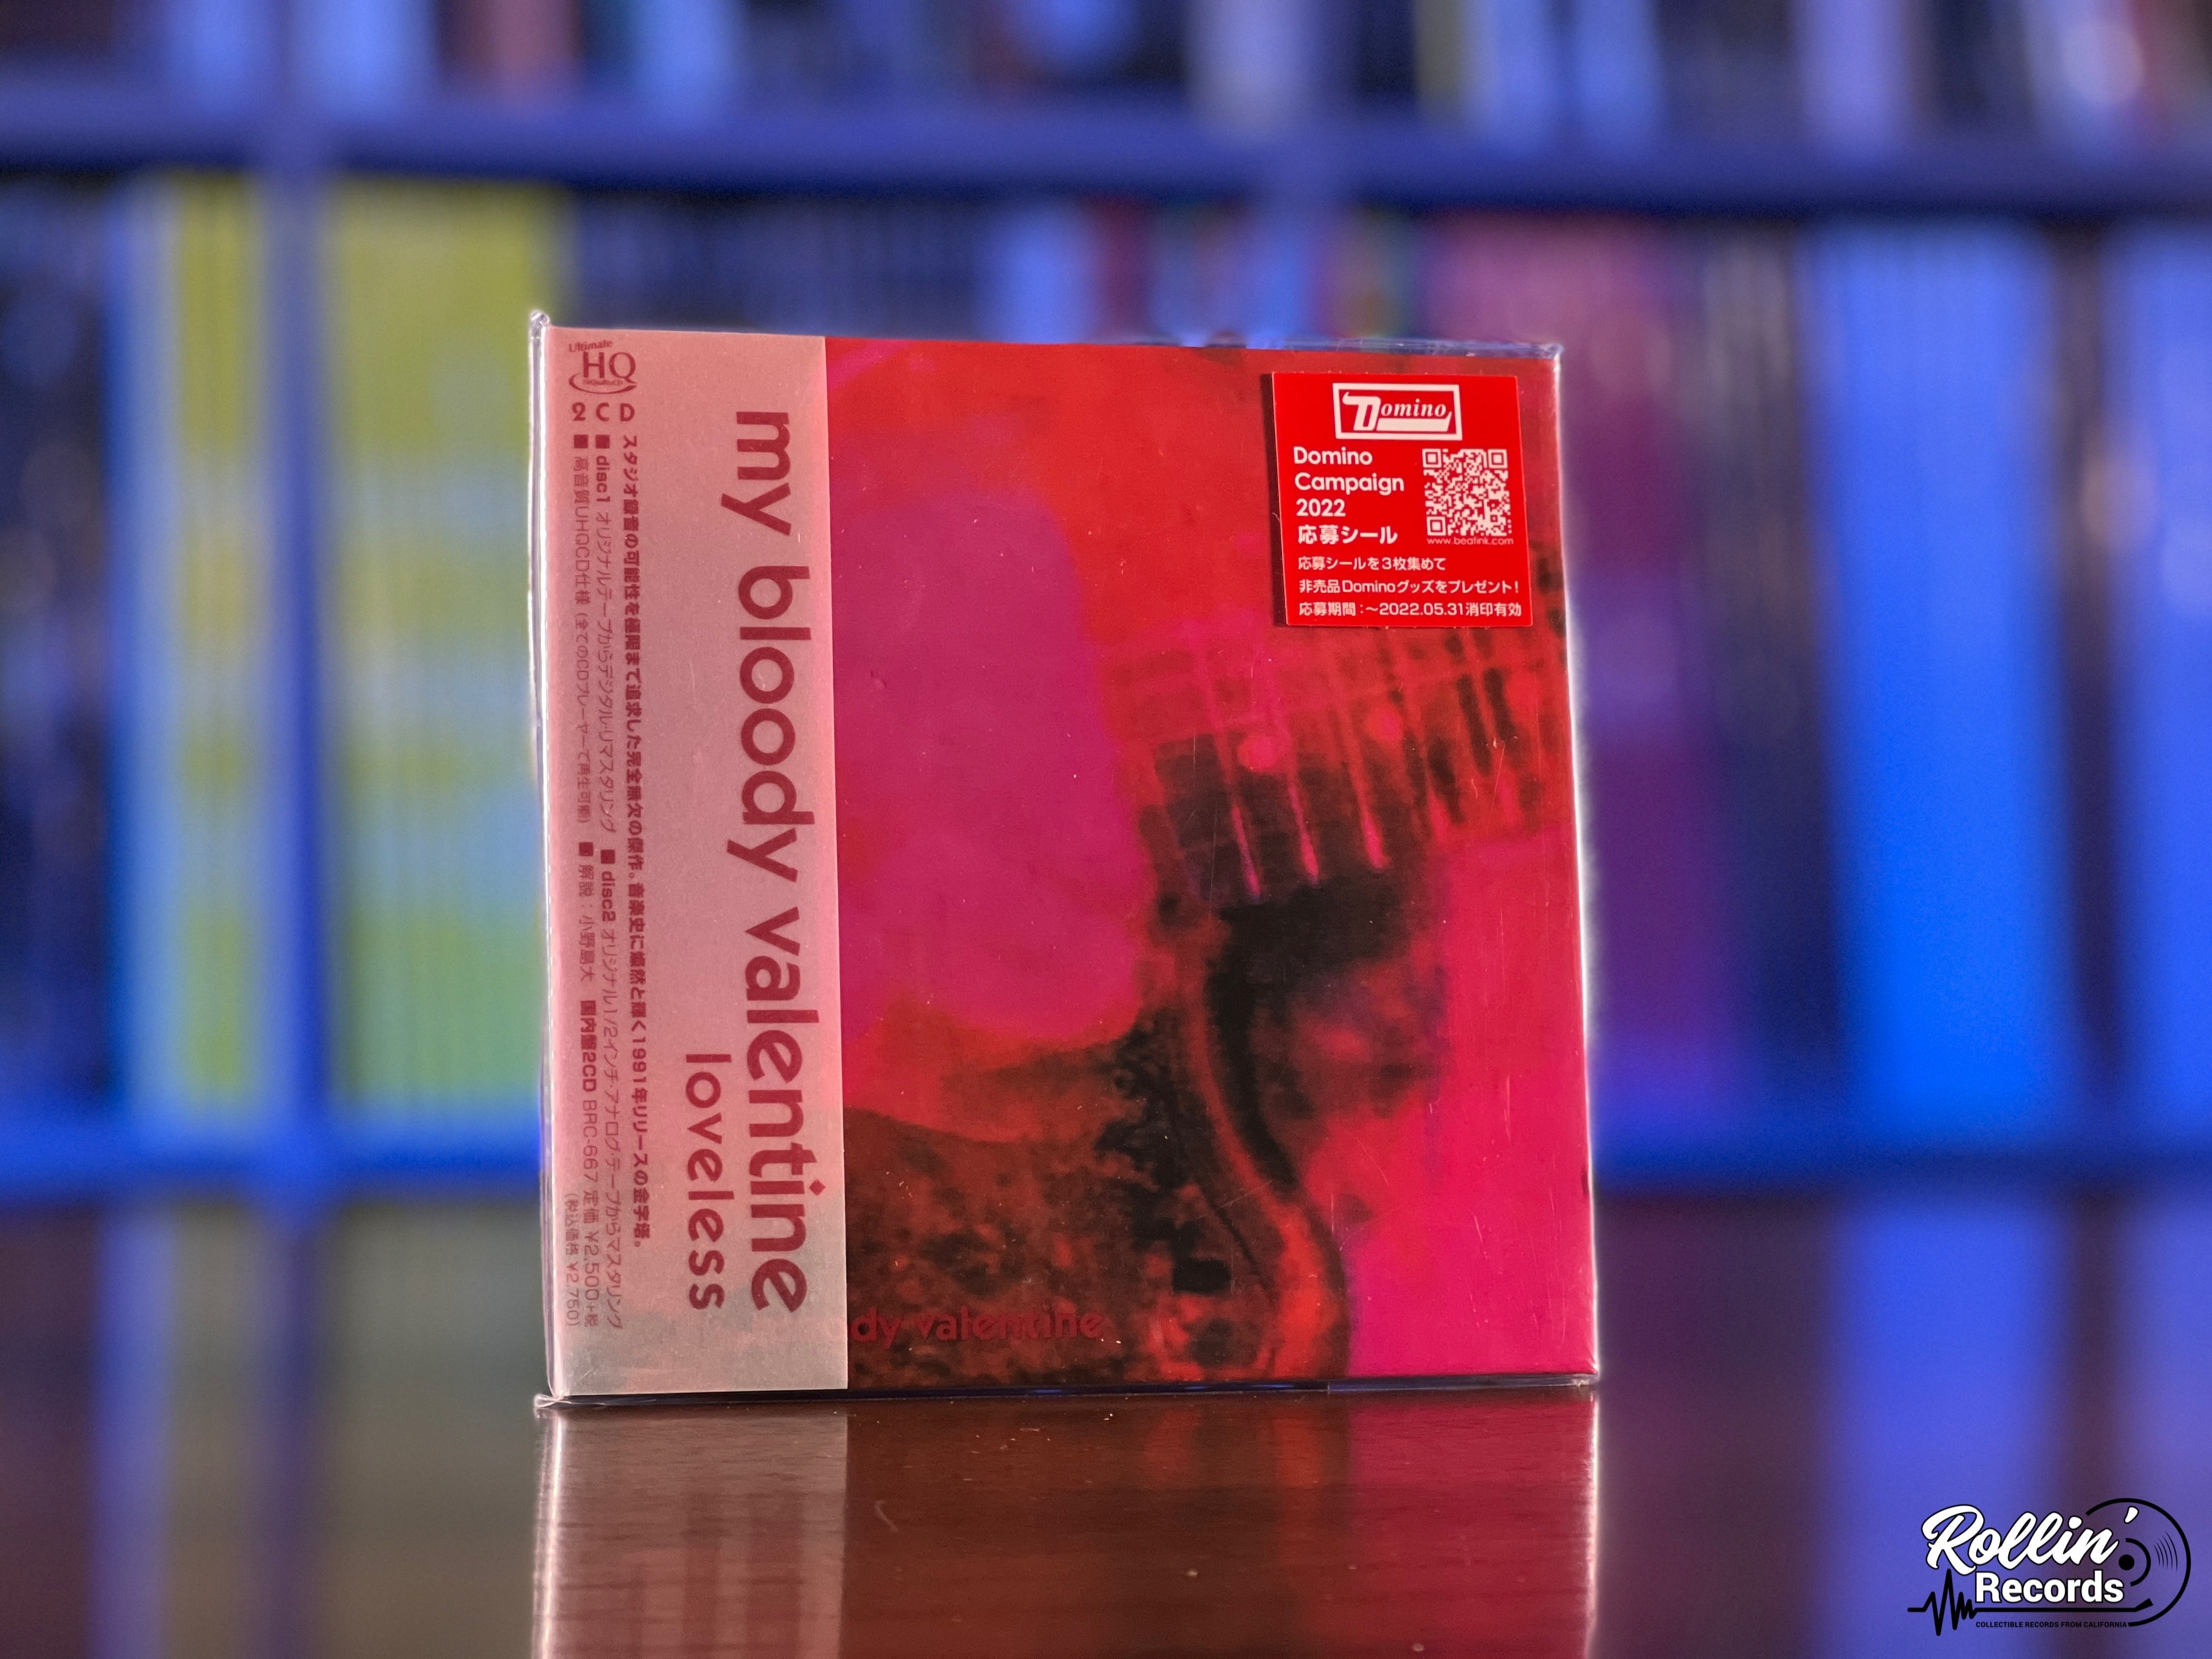 My Bloody Valentine - Loveless (CD)